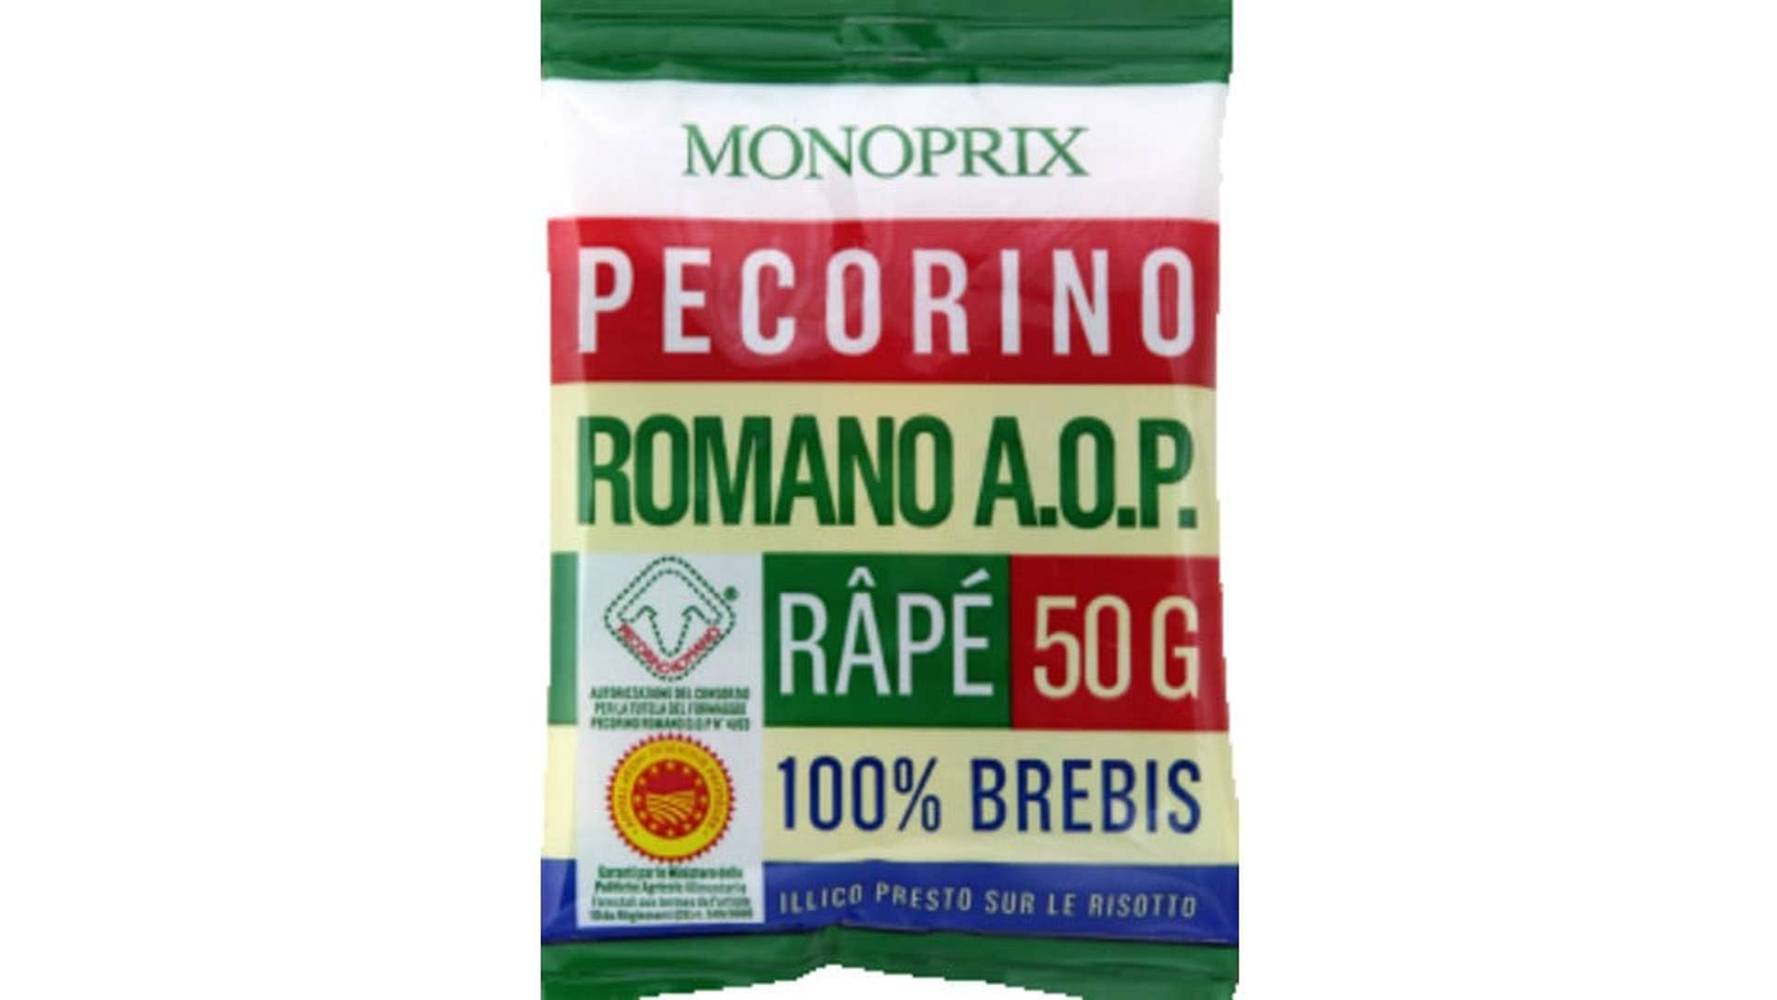 Monoprix Pecorino Romano râpé AOP Le sachet de 50 g